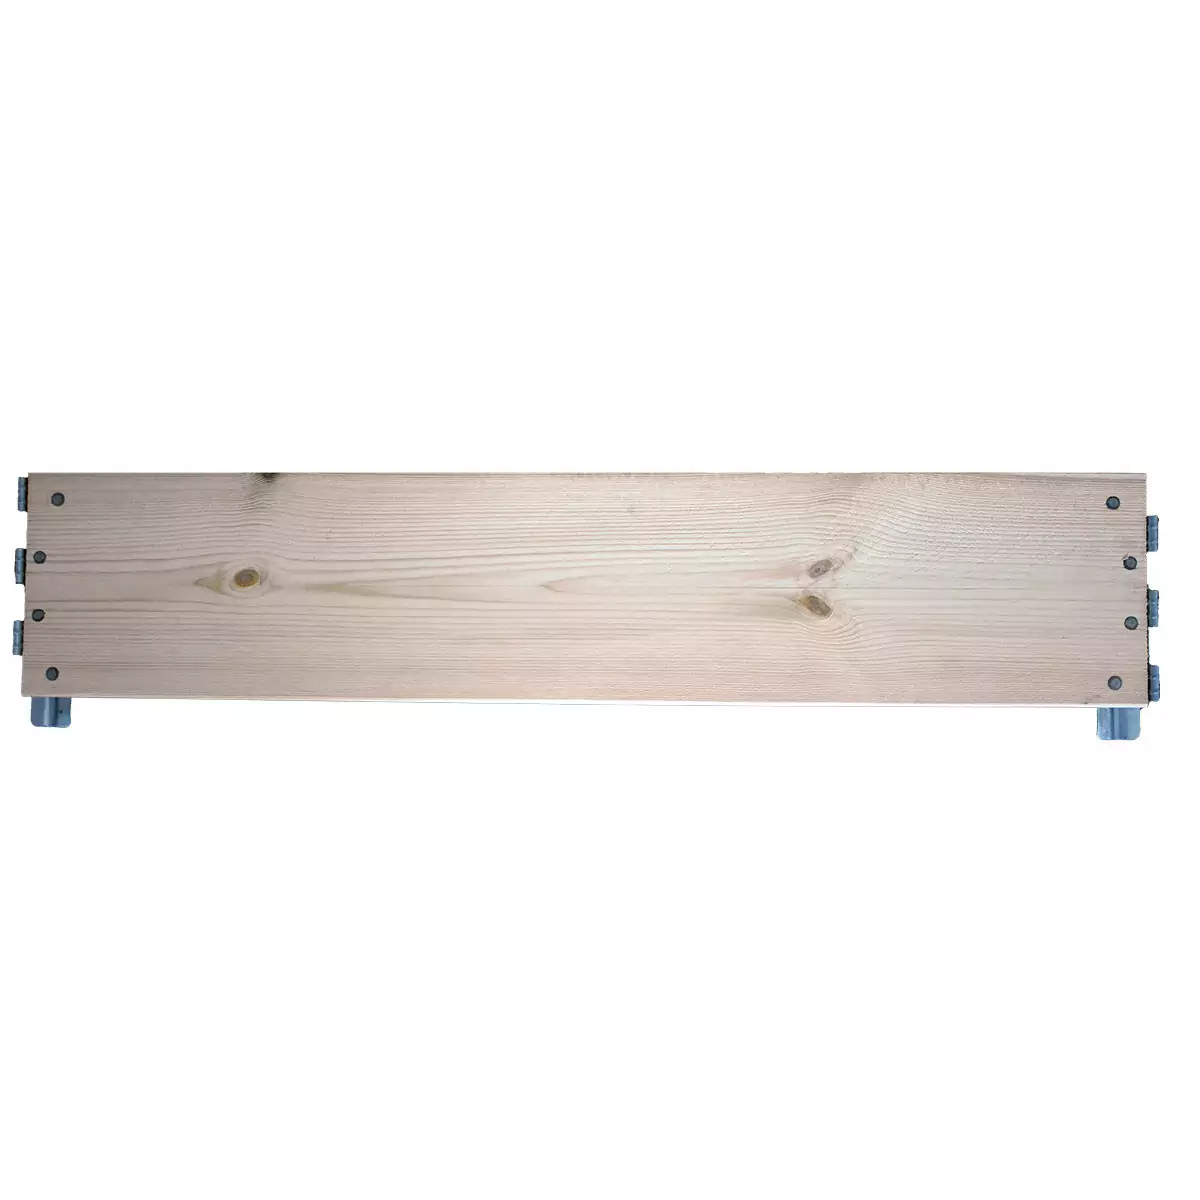 Extension board pallet length 100 cm